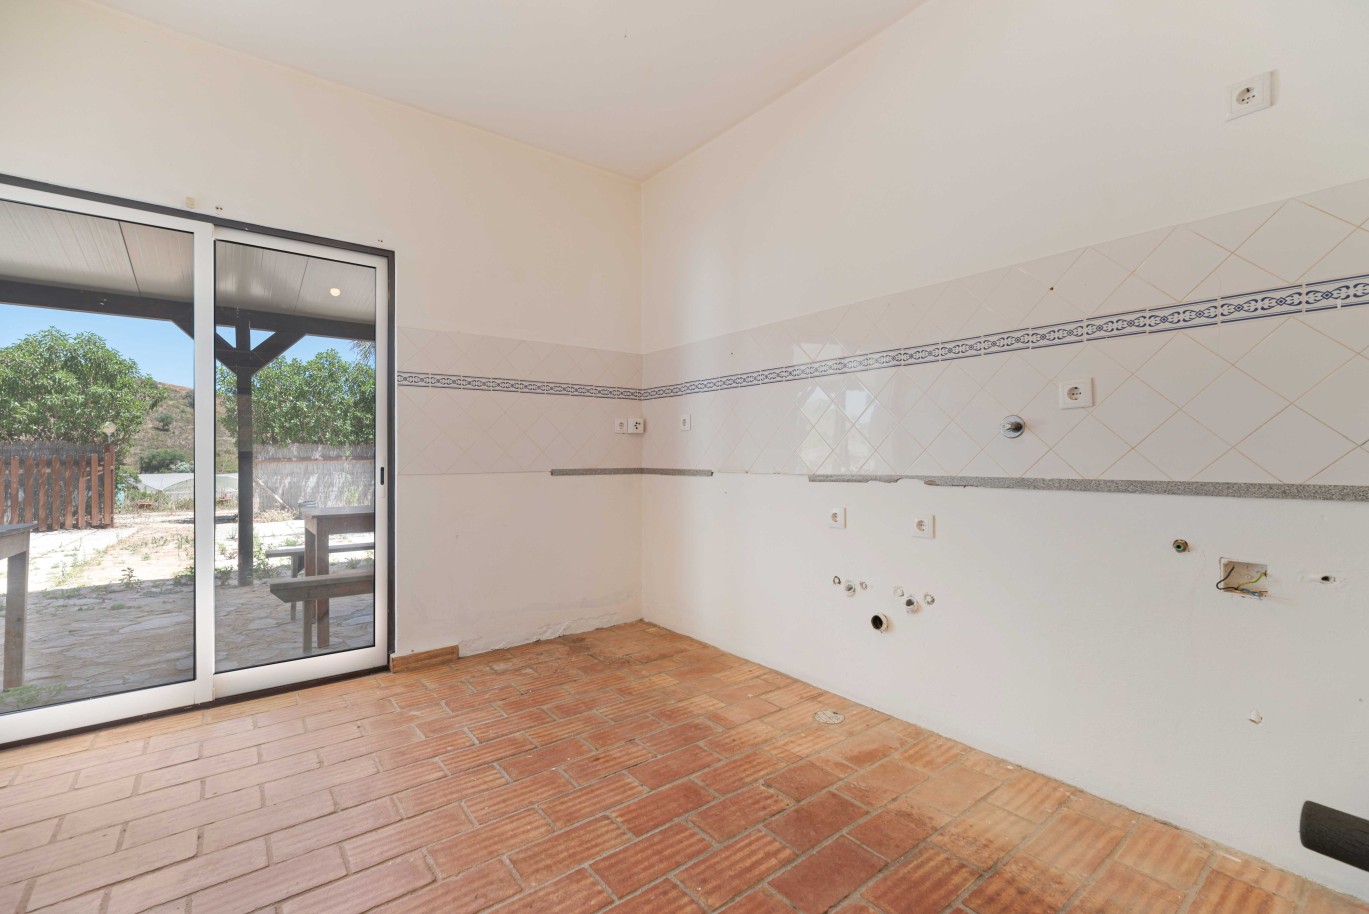 9 bedroom villa for sale in Pereira, Algarve_231594